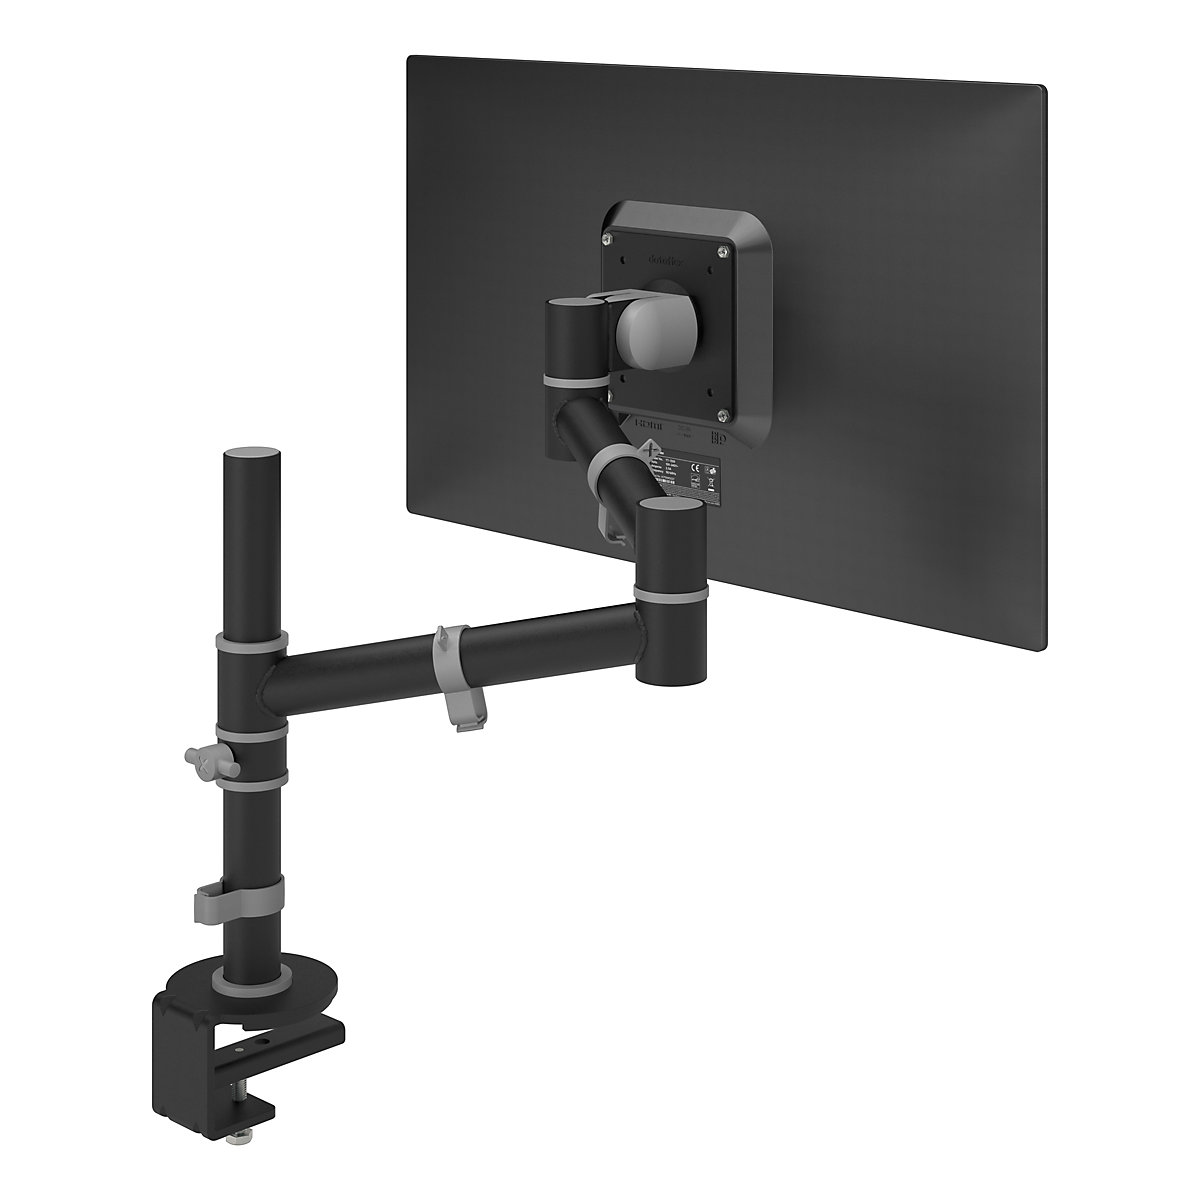 Dataflex – Rameno pro monitor VIEWGO, jednoduché rameno pro 1 monitor, černá